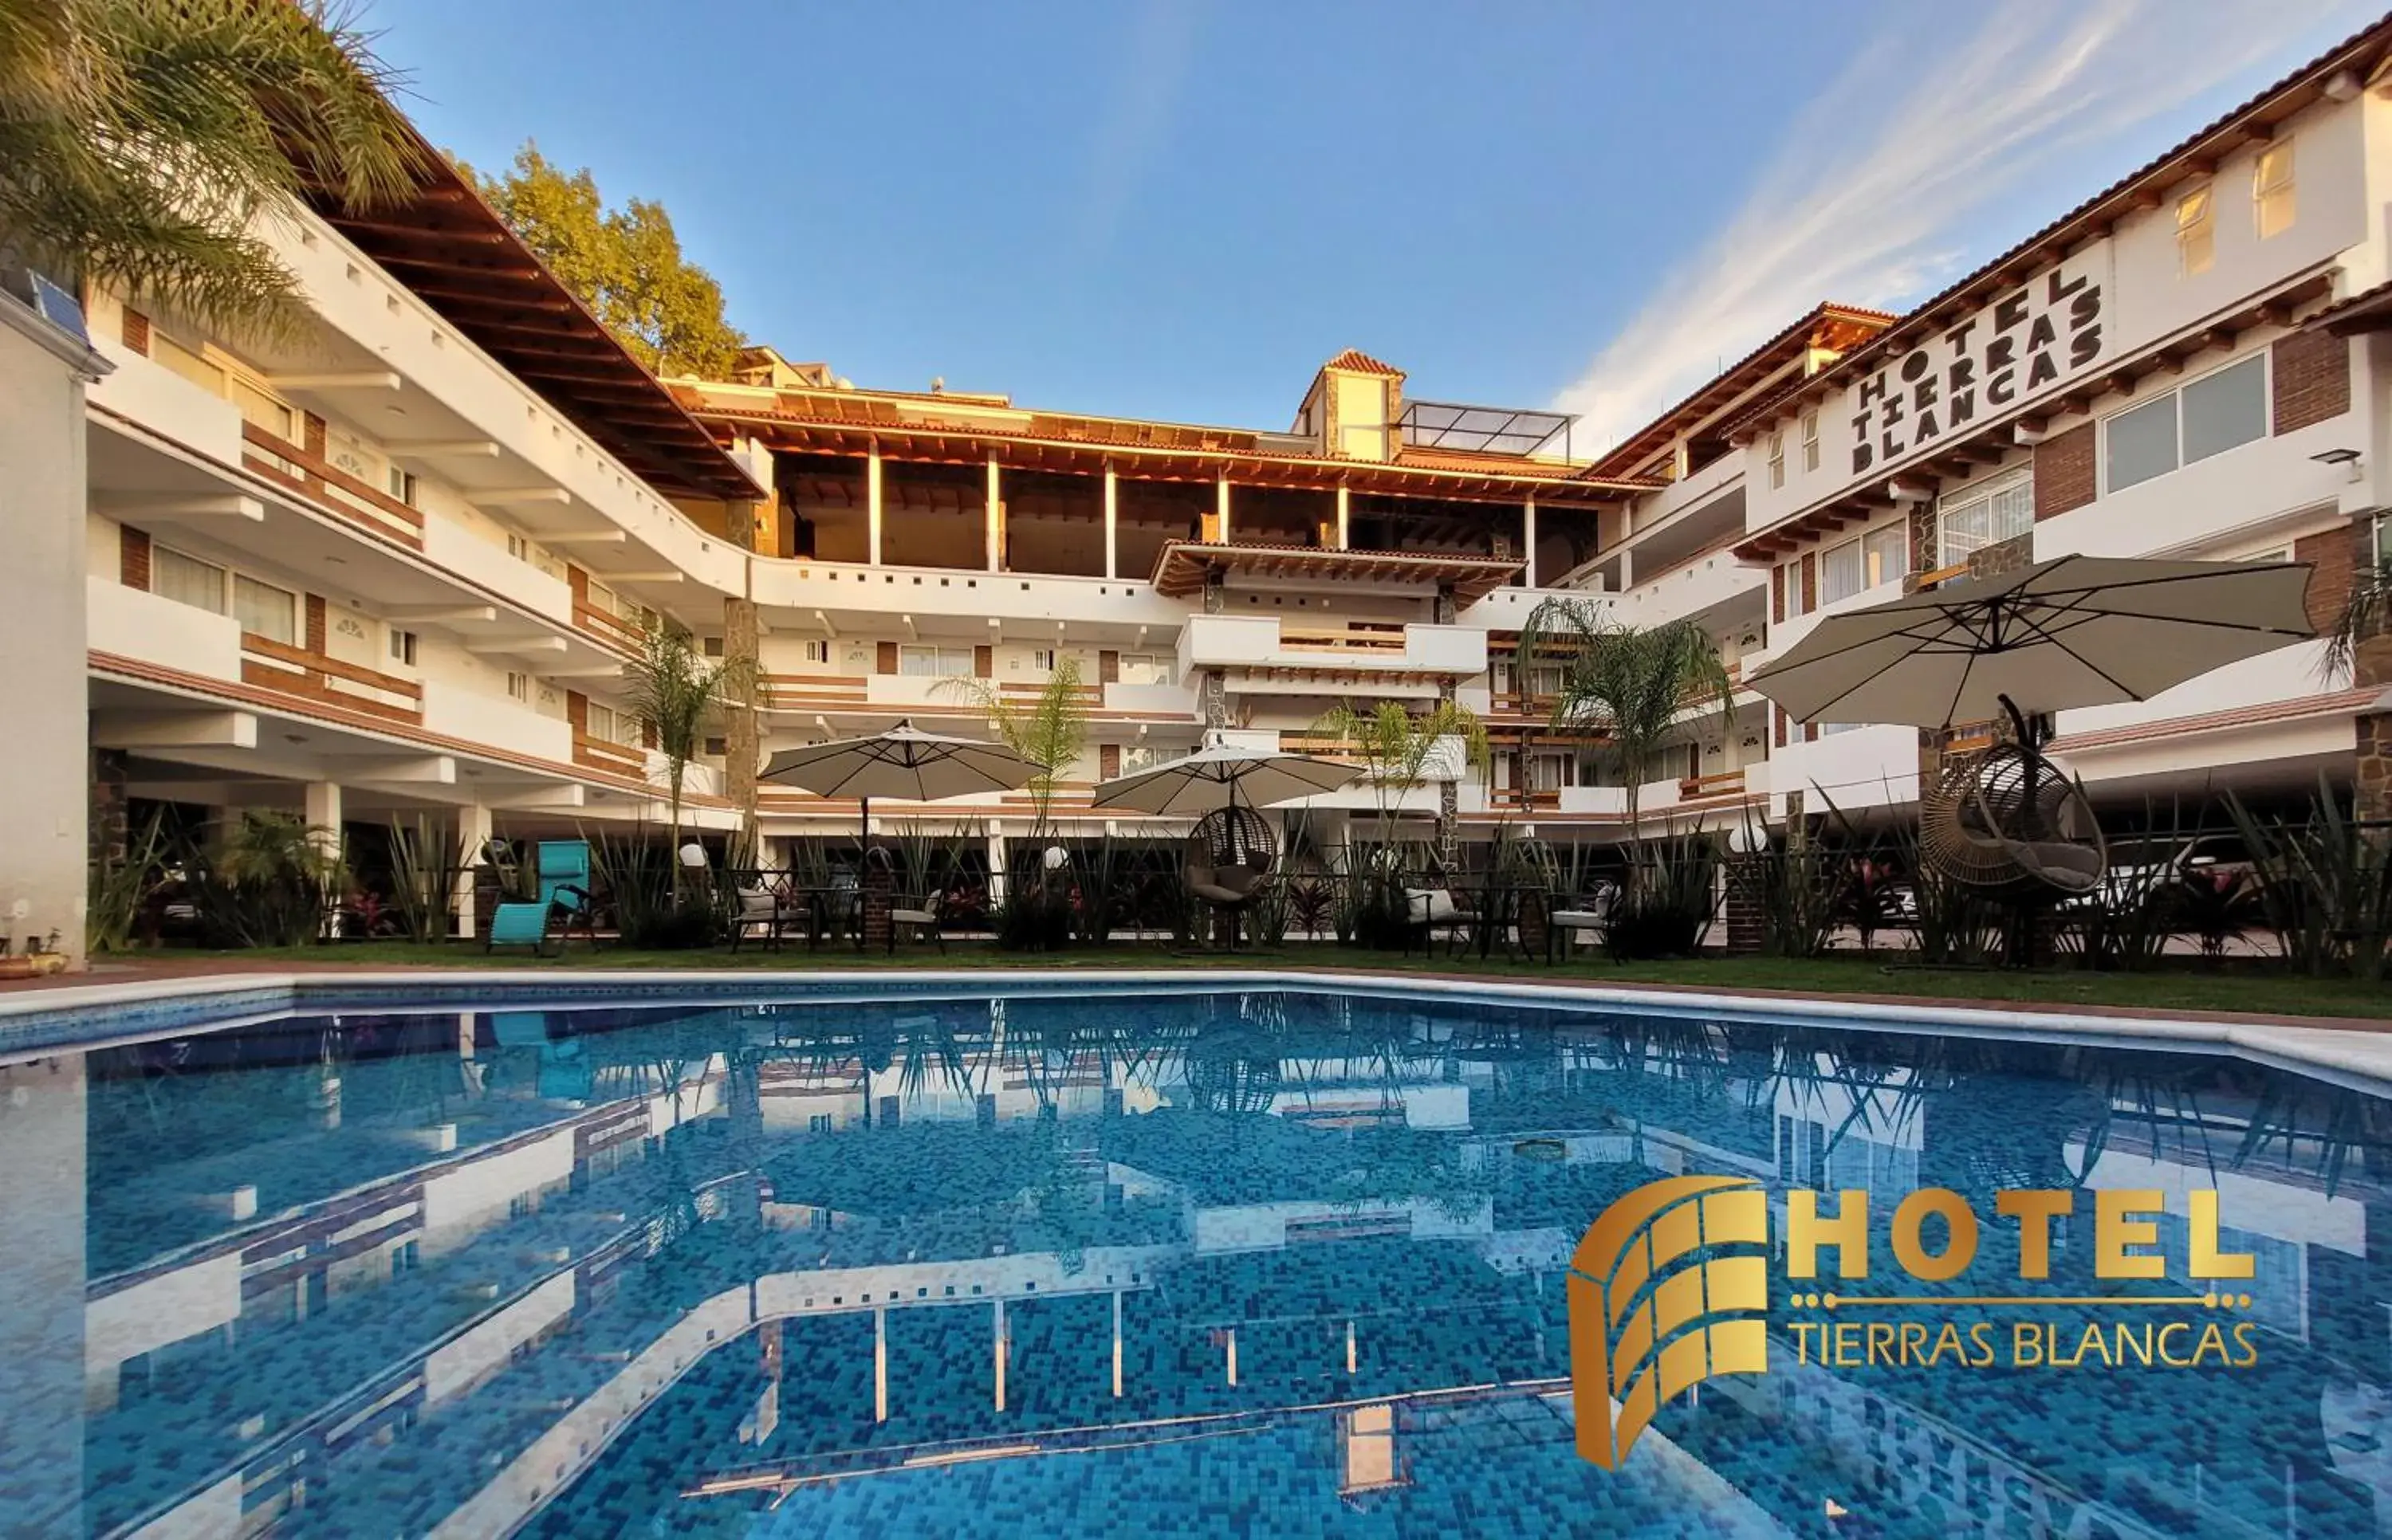 Property building, Swimming Pool in Hotel Tierras Blancas